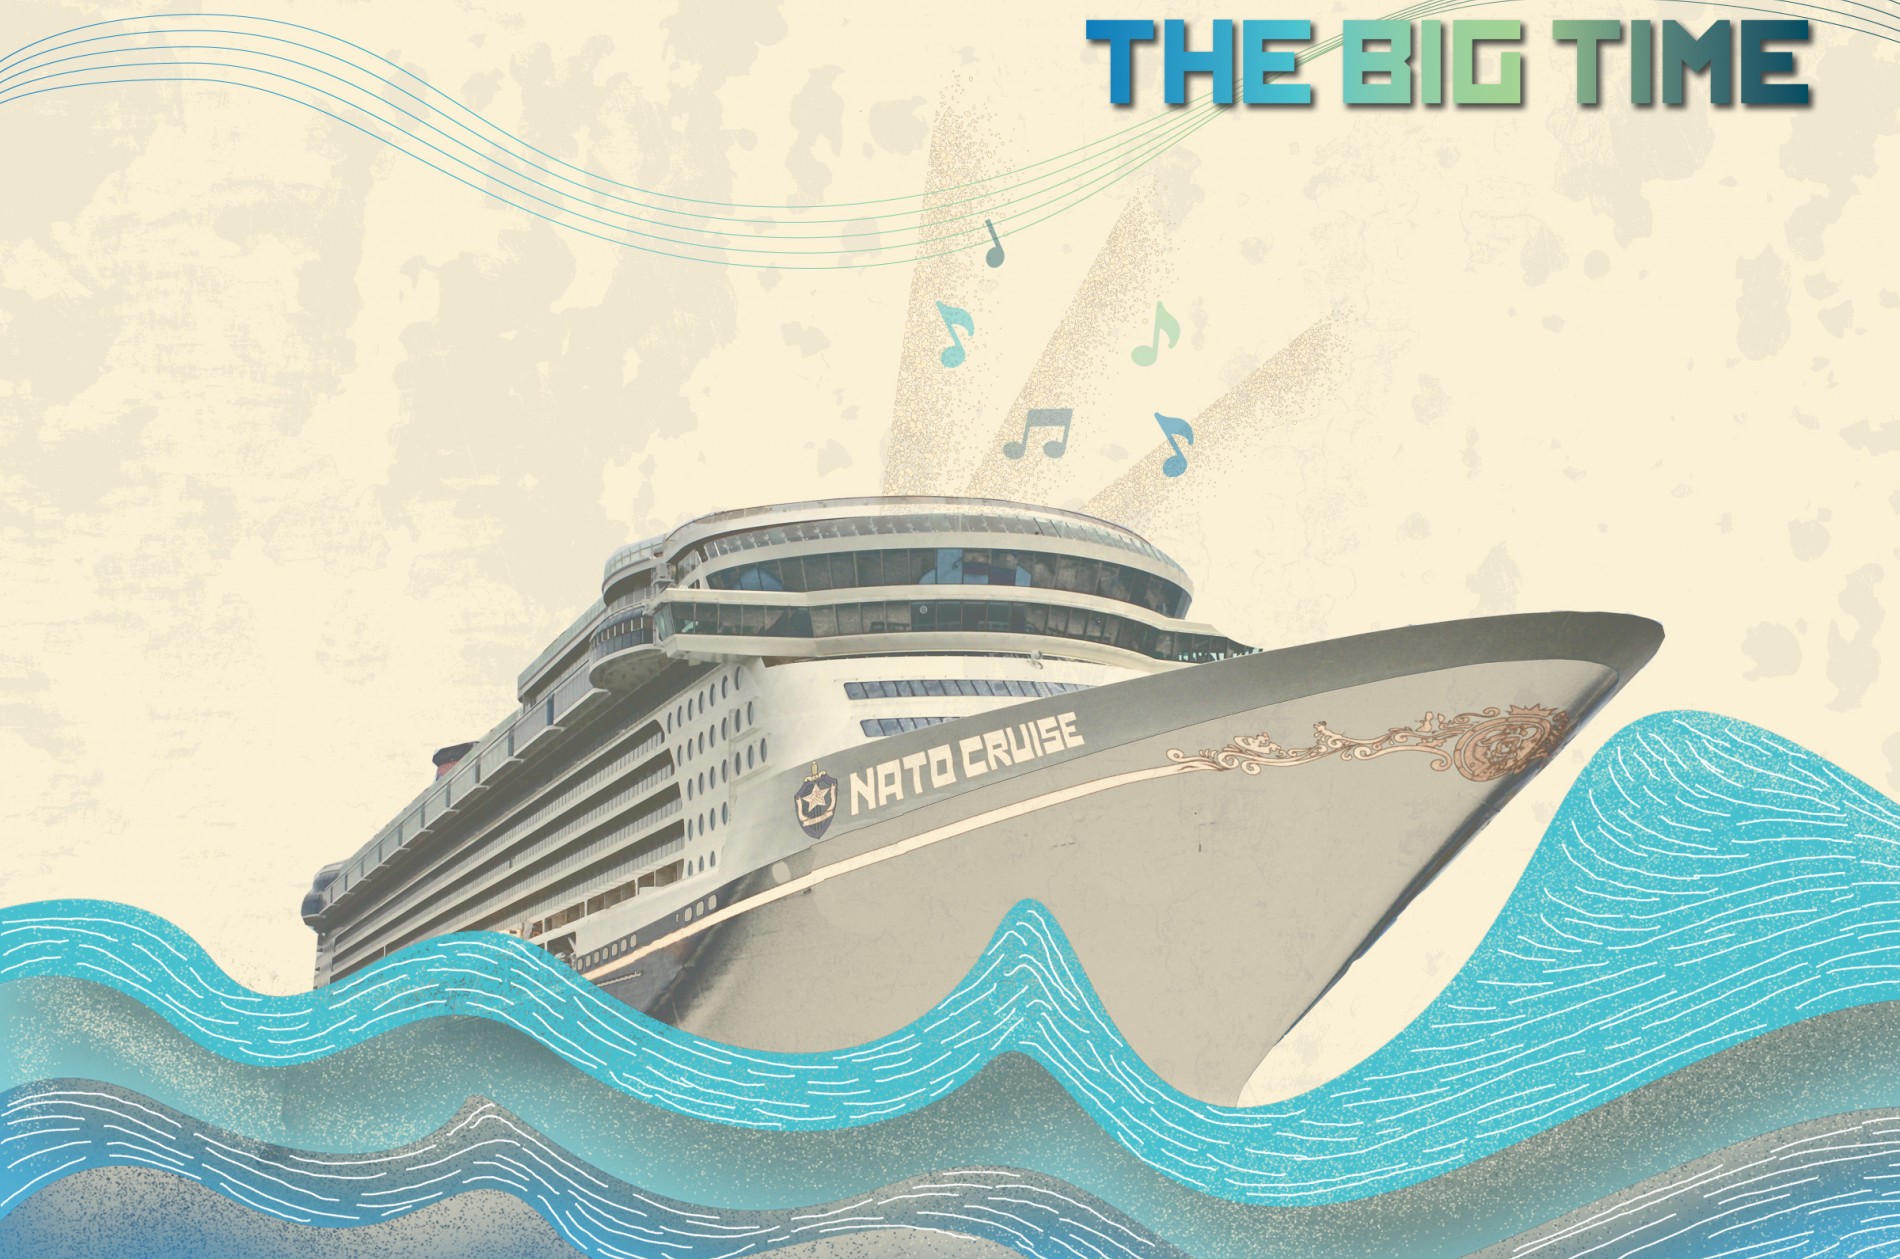 The Big Time NATO cruise ship 